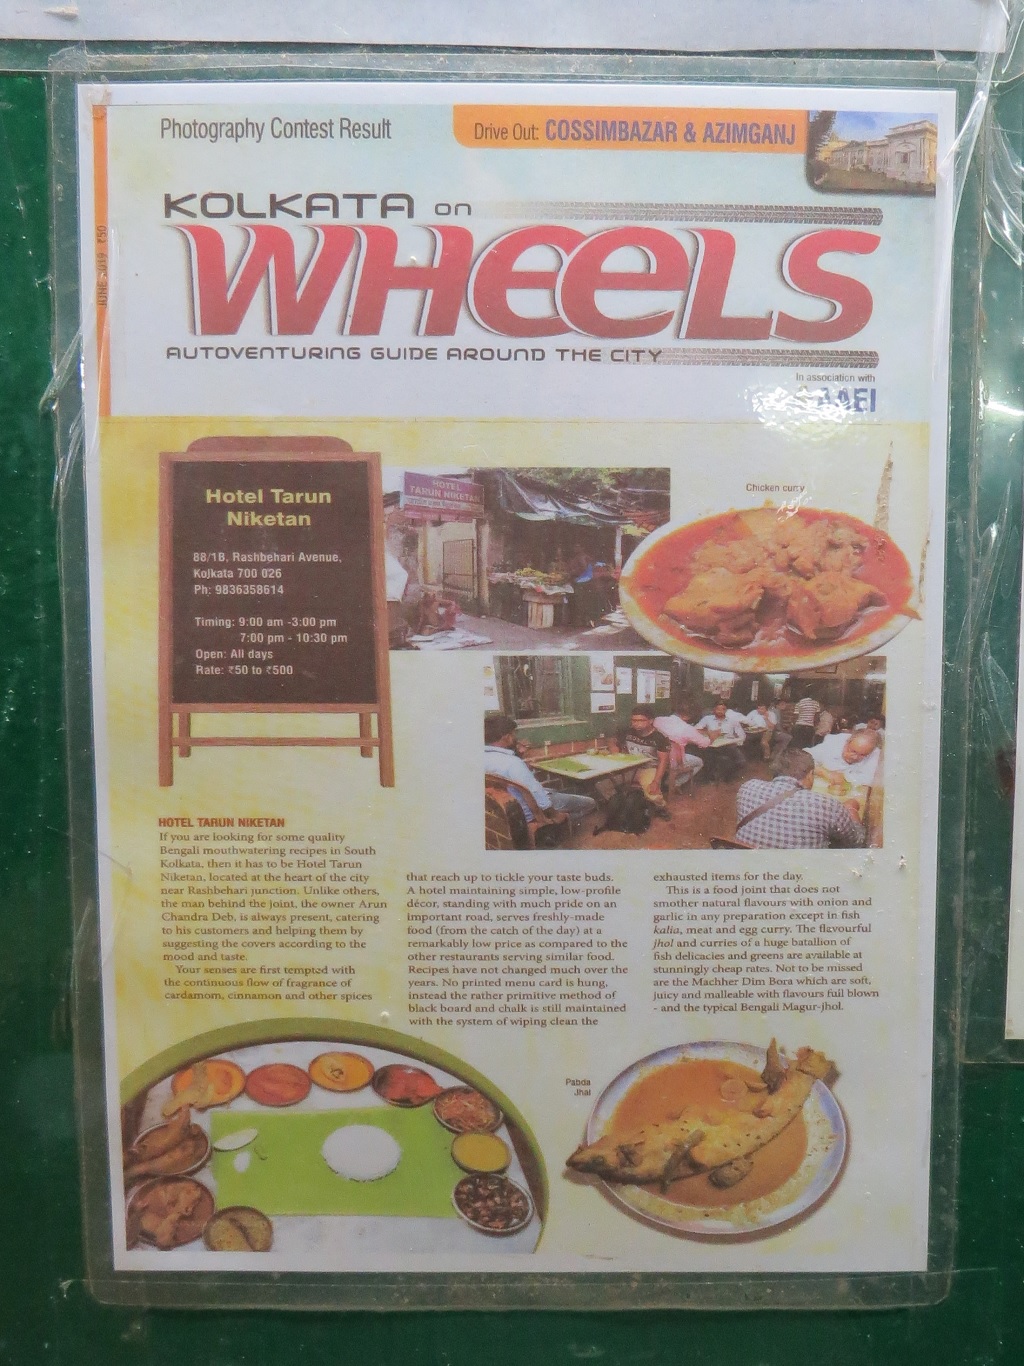 Article About Hotel Tarun Niketan by Kolkata on Wheels